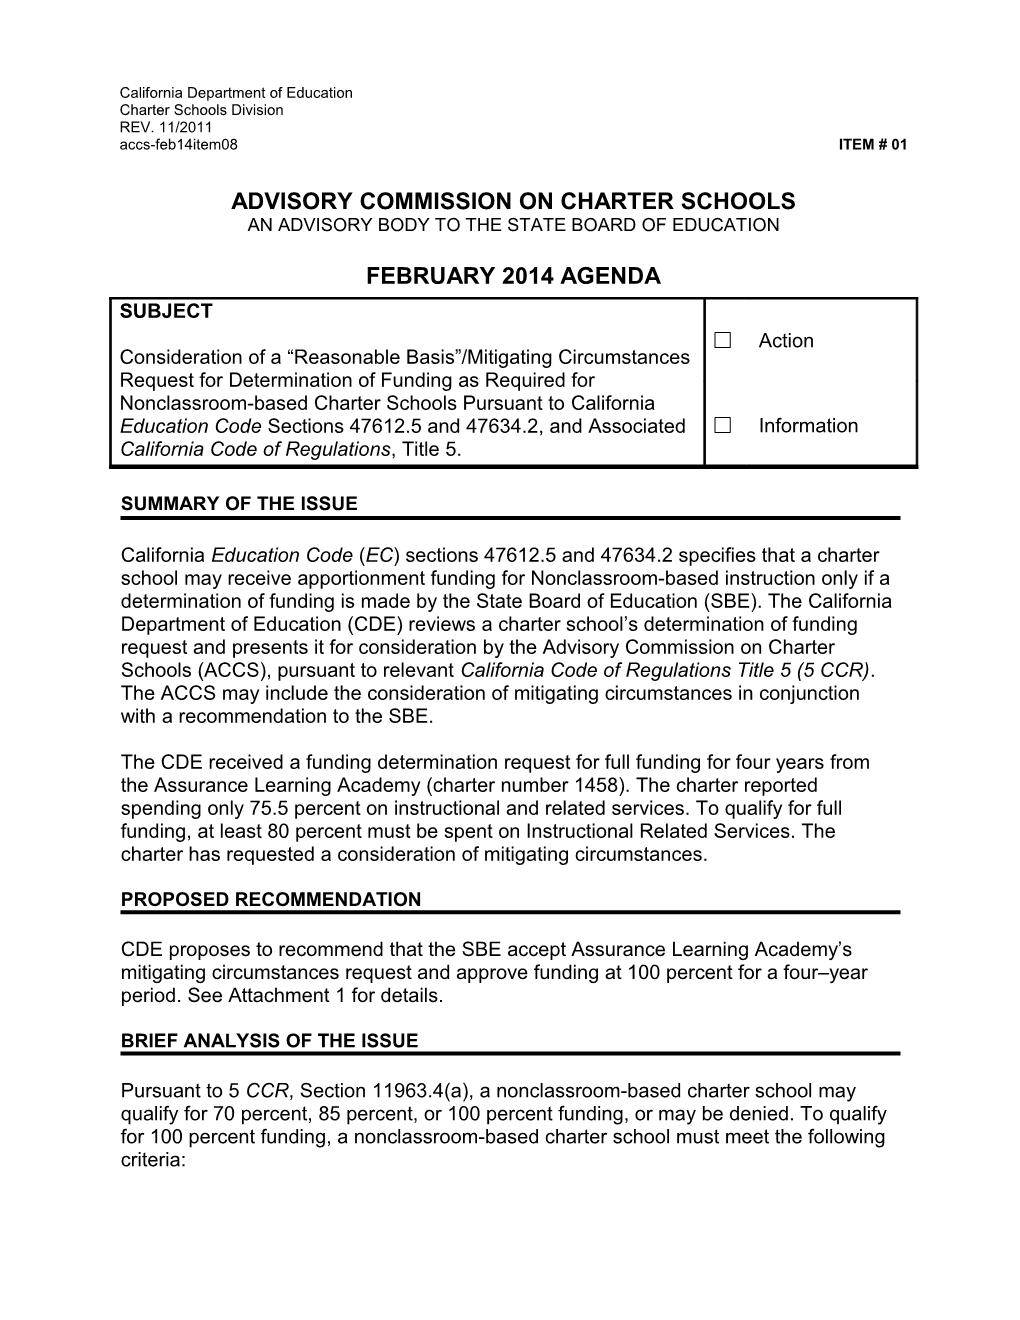 February 2014 ACCS Agenda Item 08 - Advisory Commission on Charter Schools (CA State Board